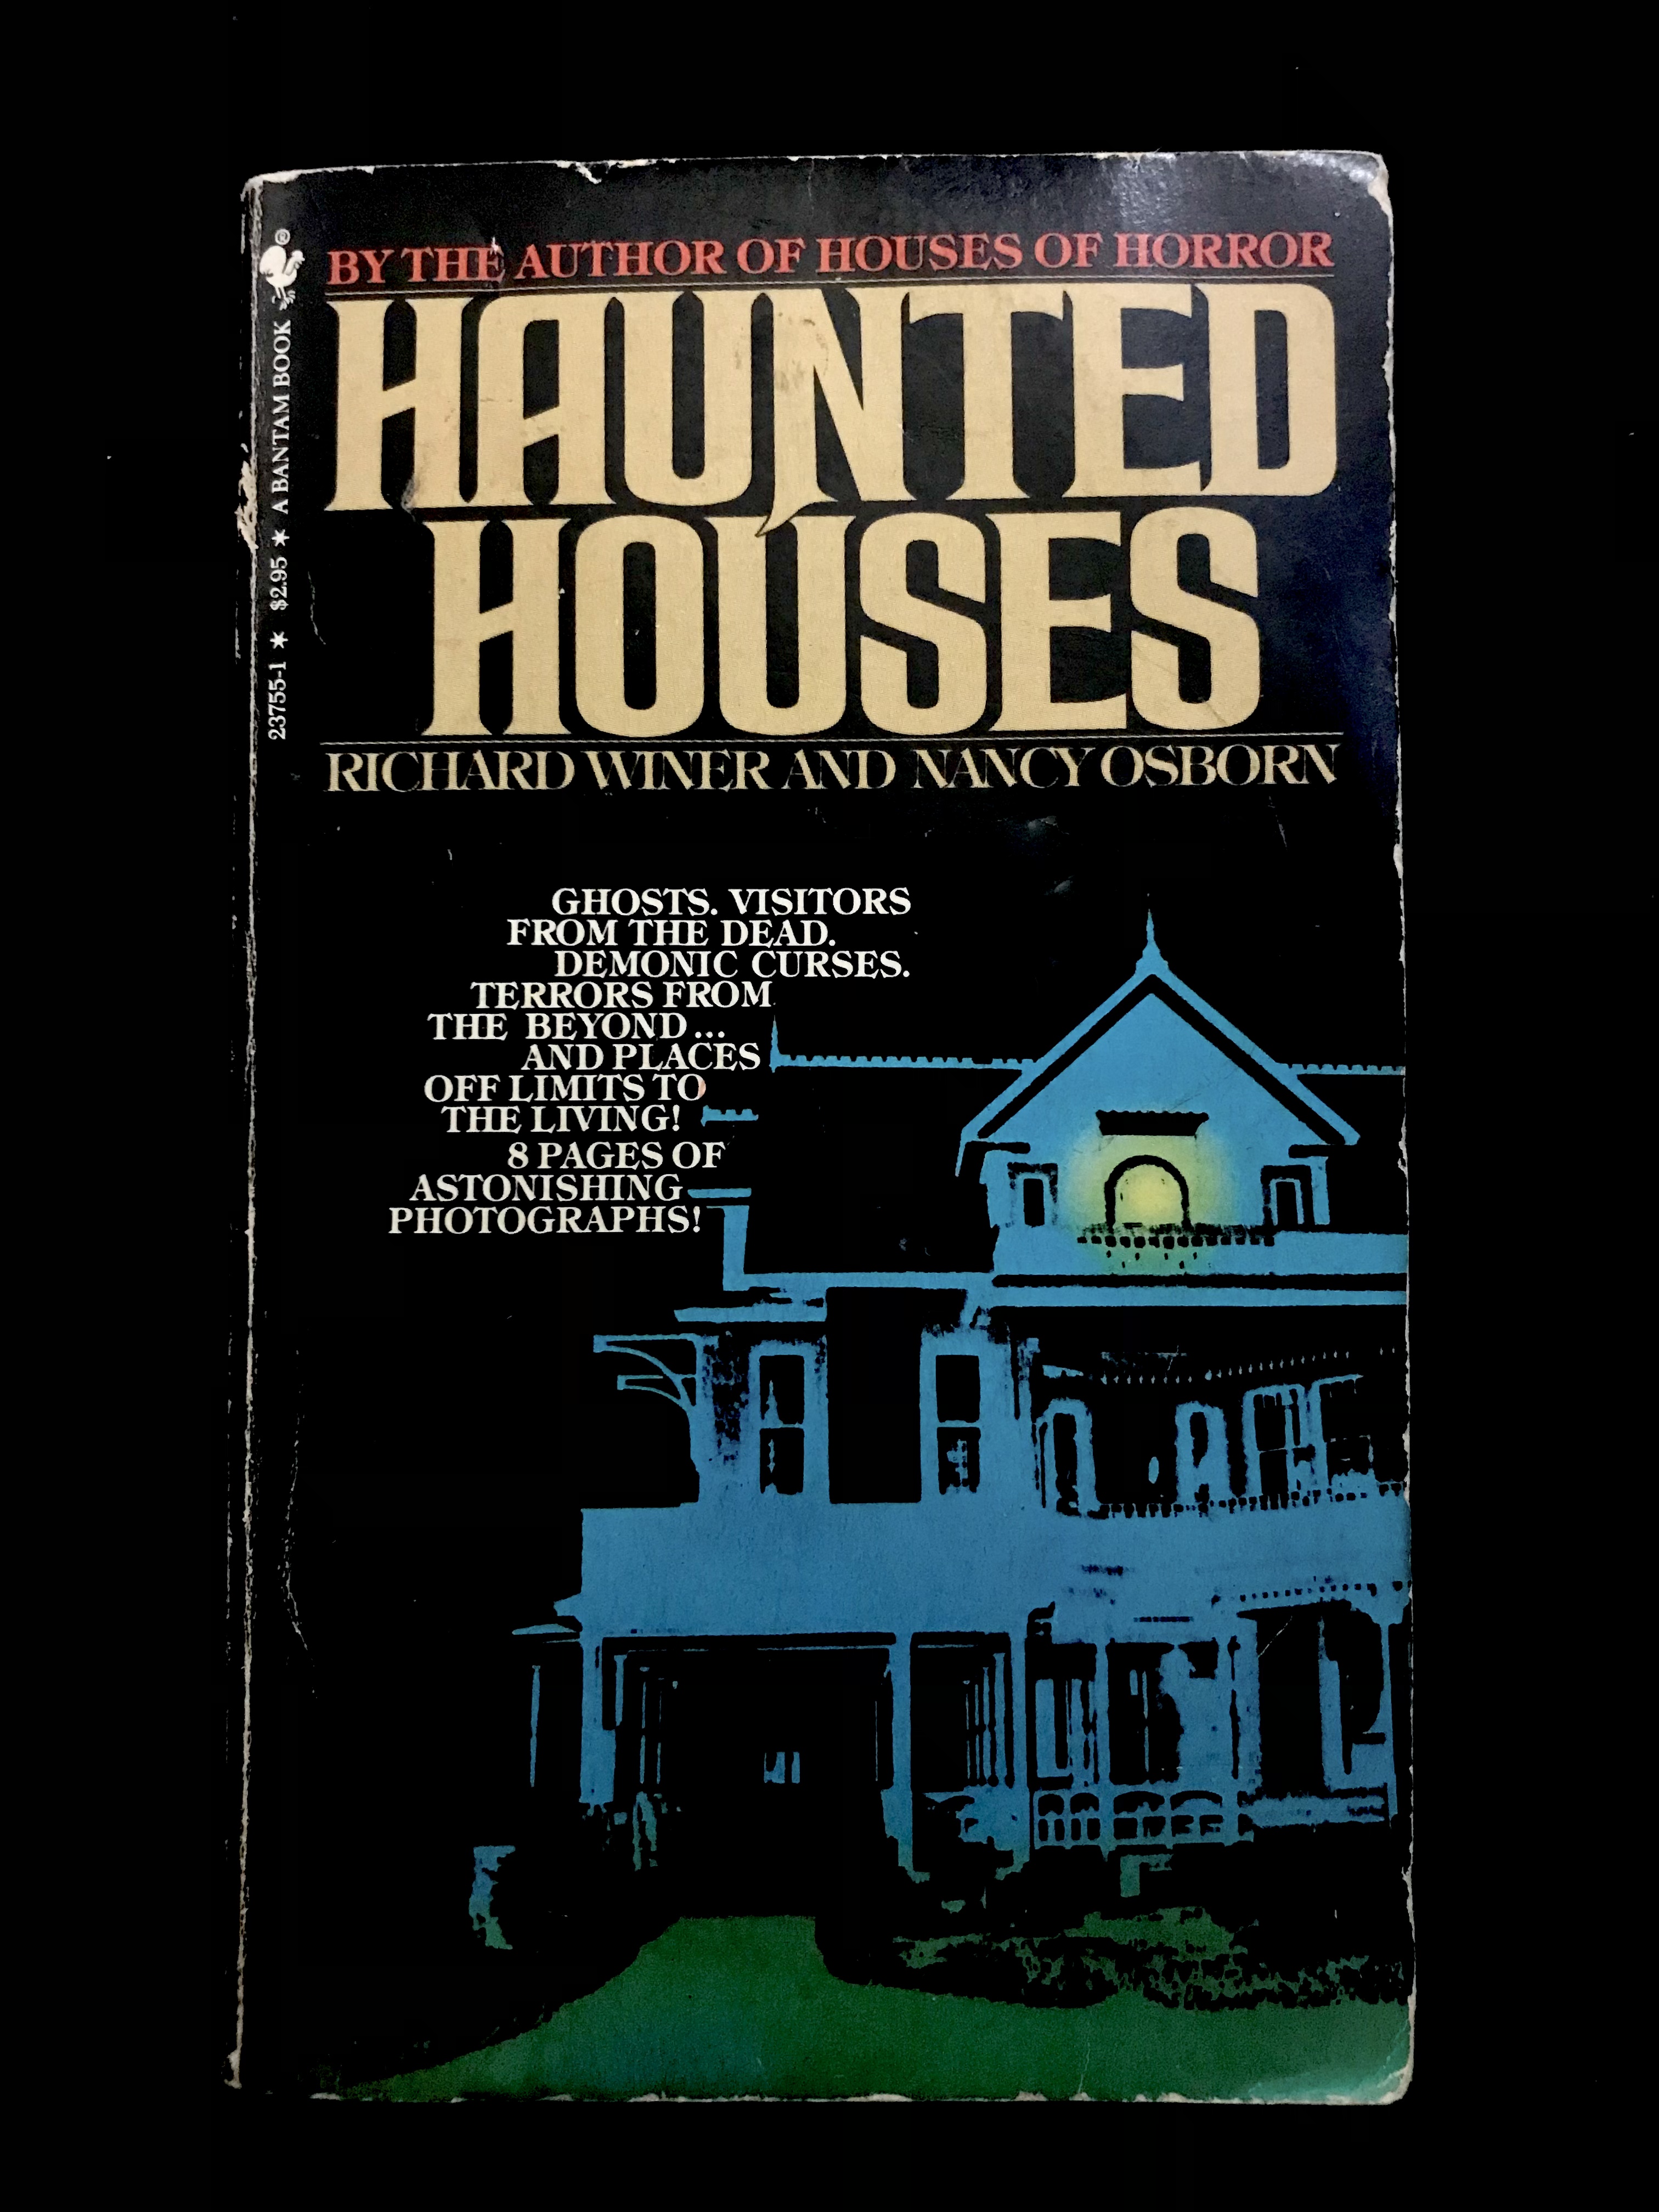 Haunted Houses by R. Winer & N. Osborn